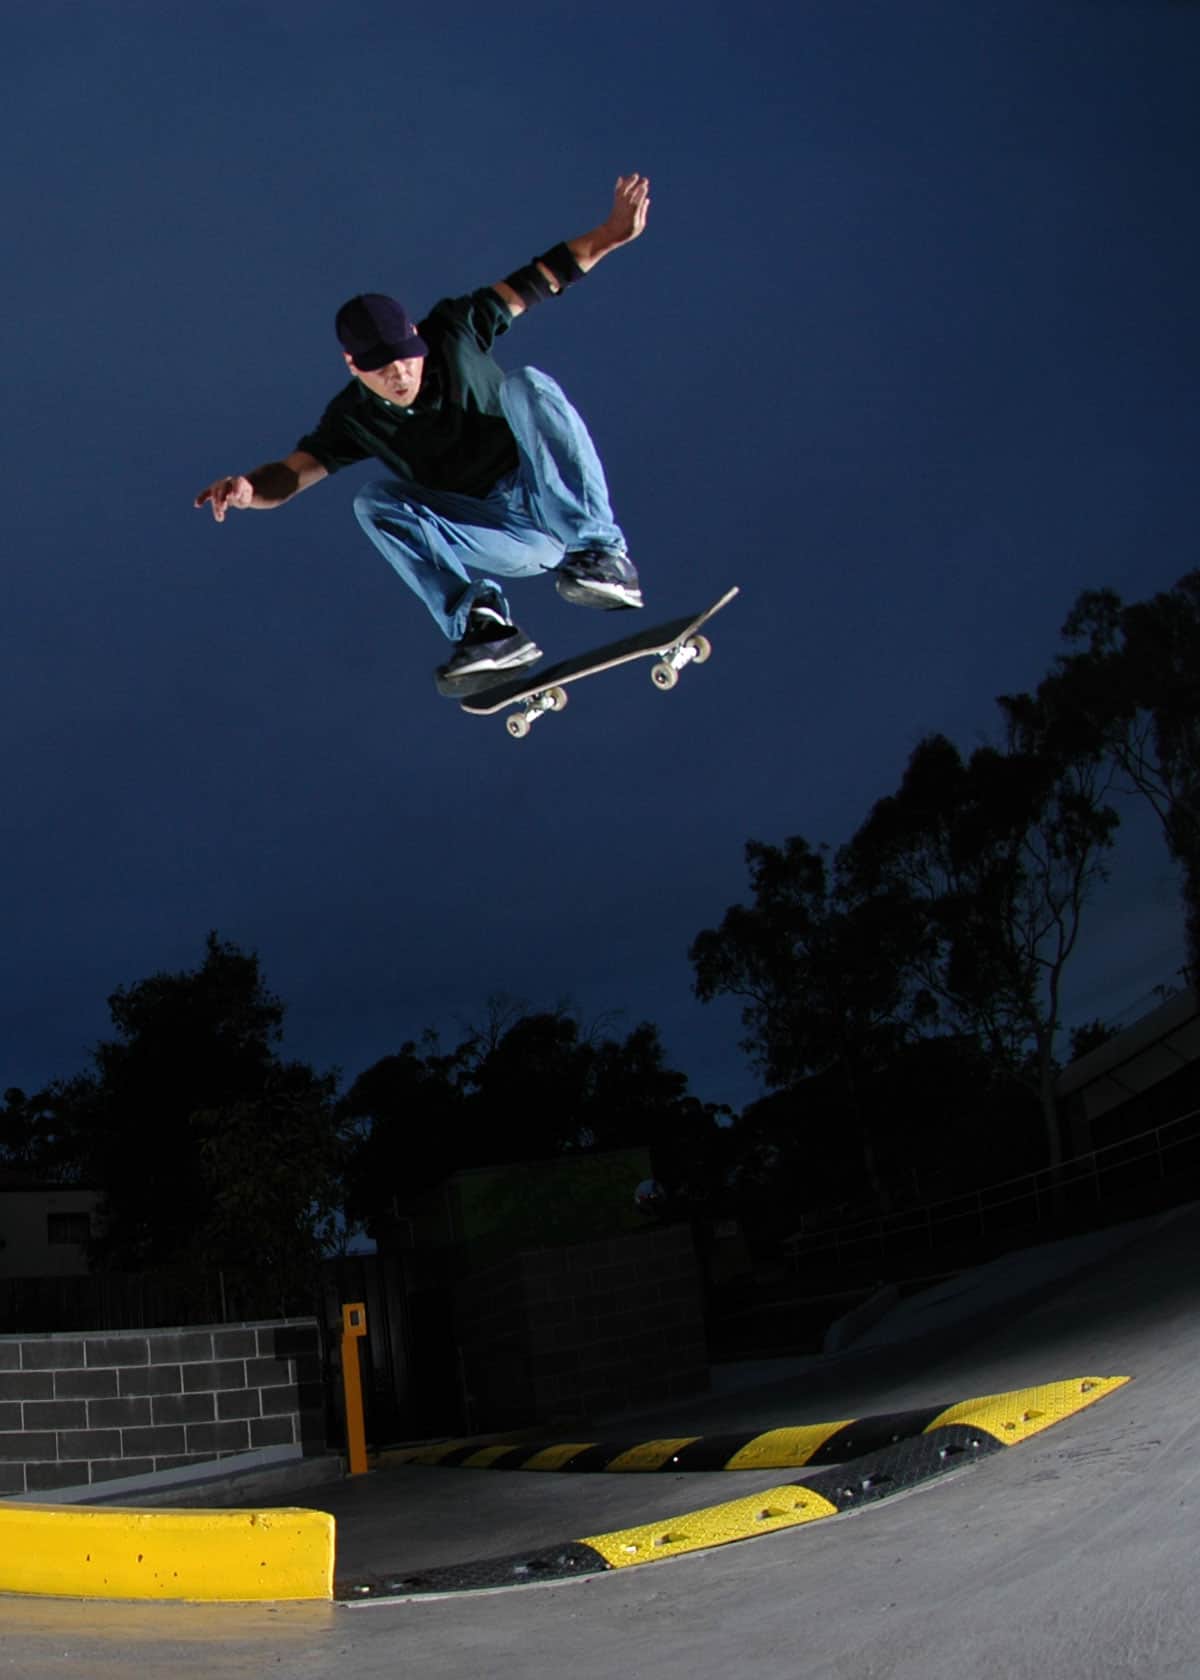 Best camera for skateboarding photography